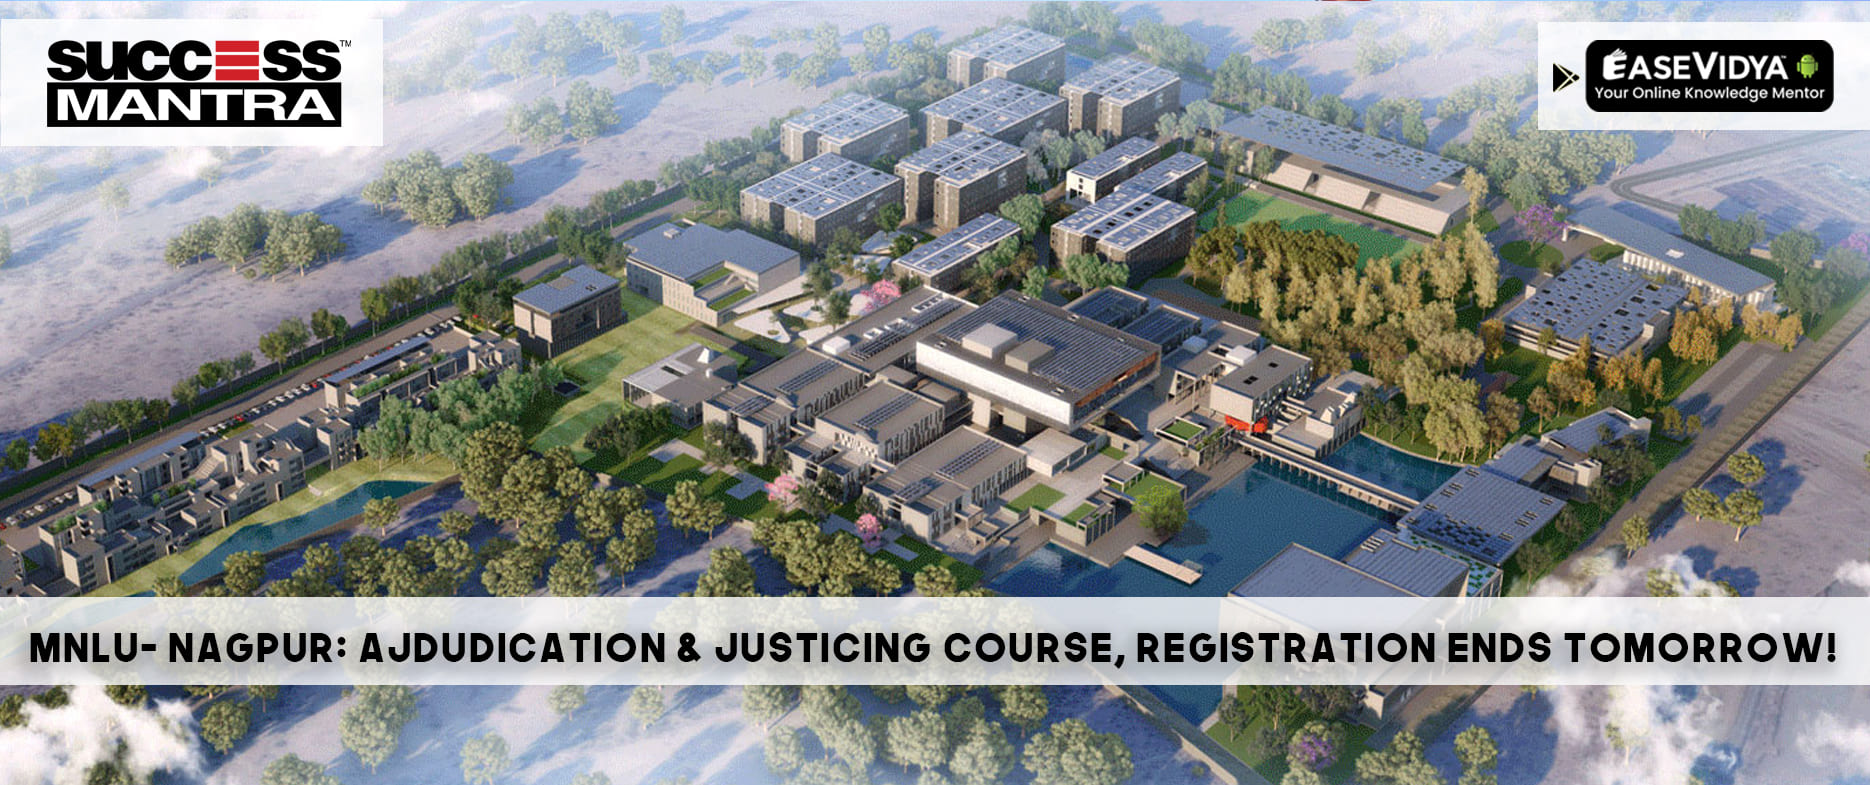 MNLU- Nagpur - Adjudication and Justicing Course registration ends tomorrow!